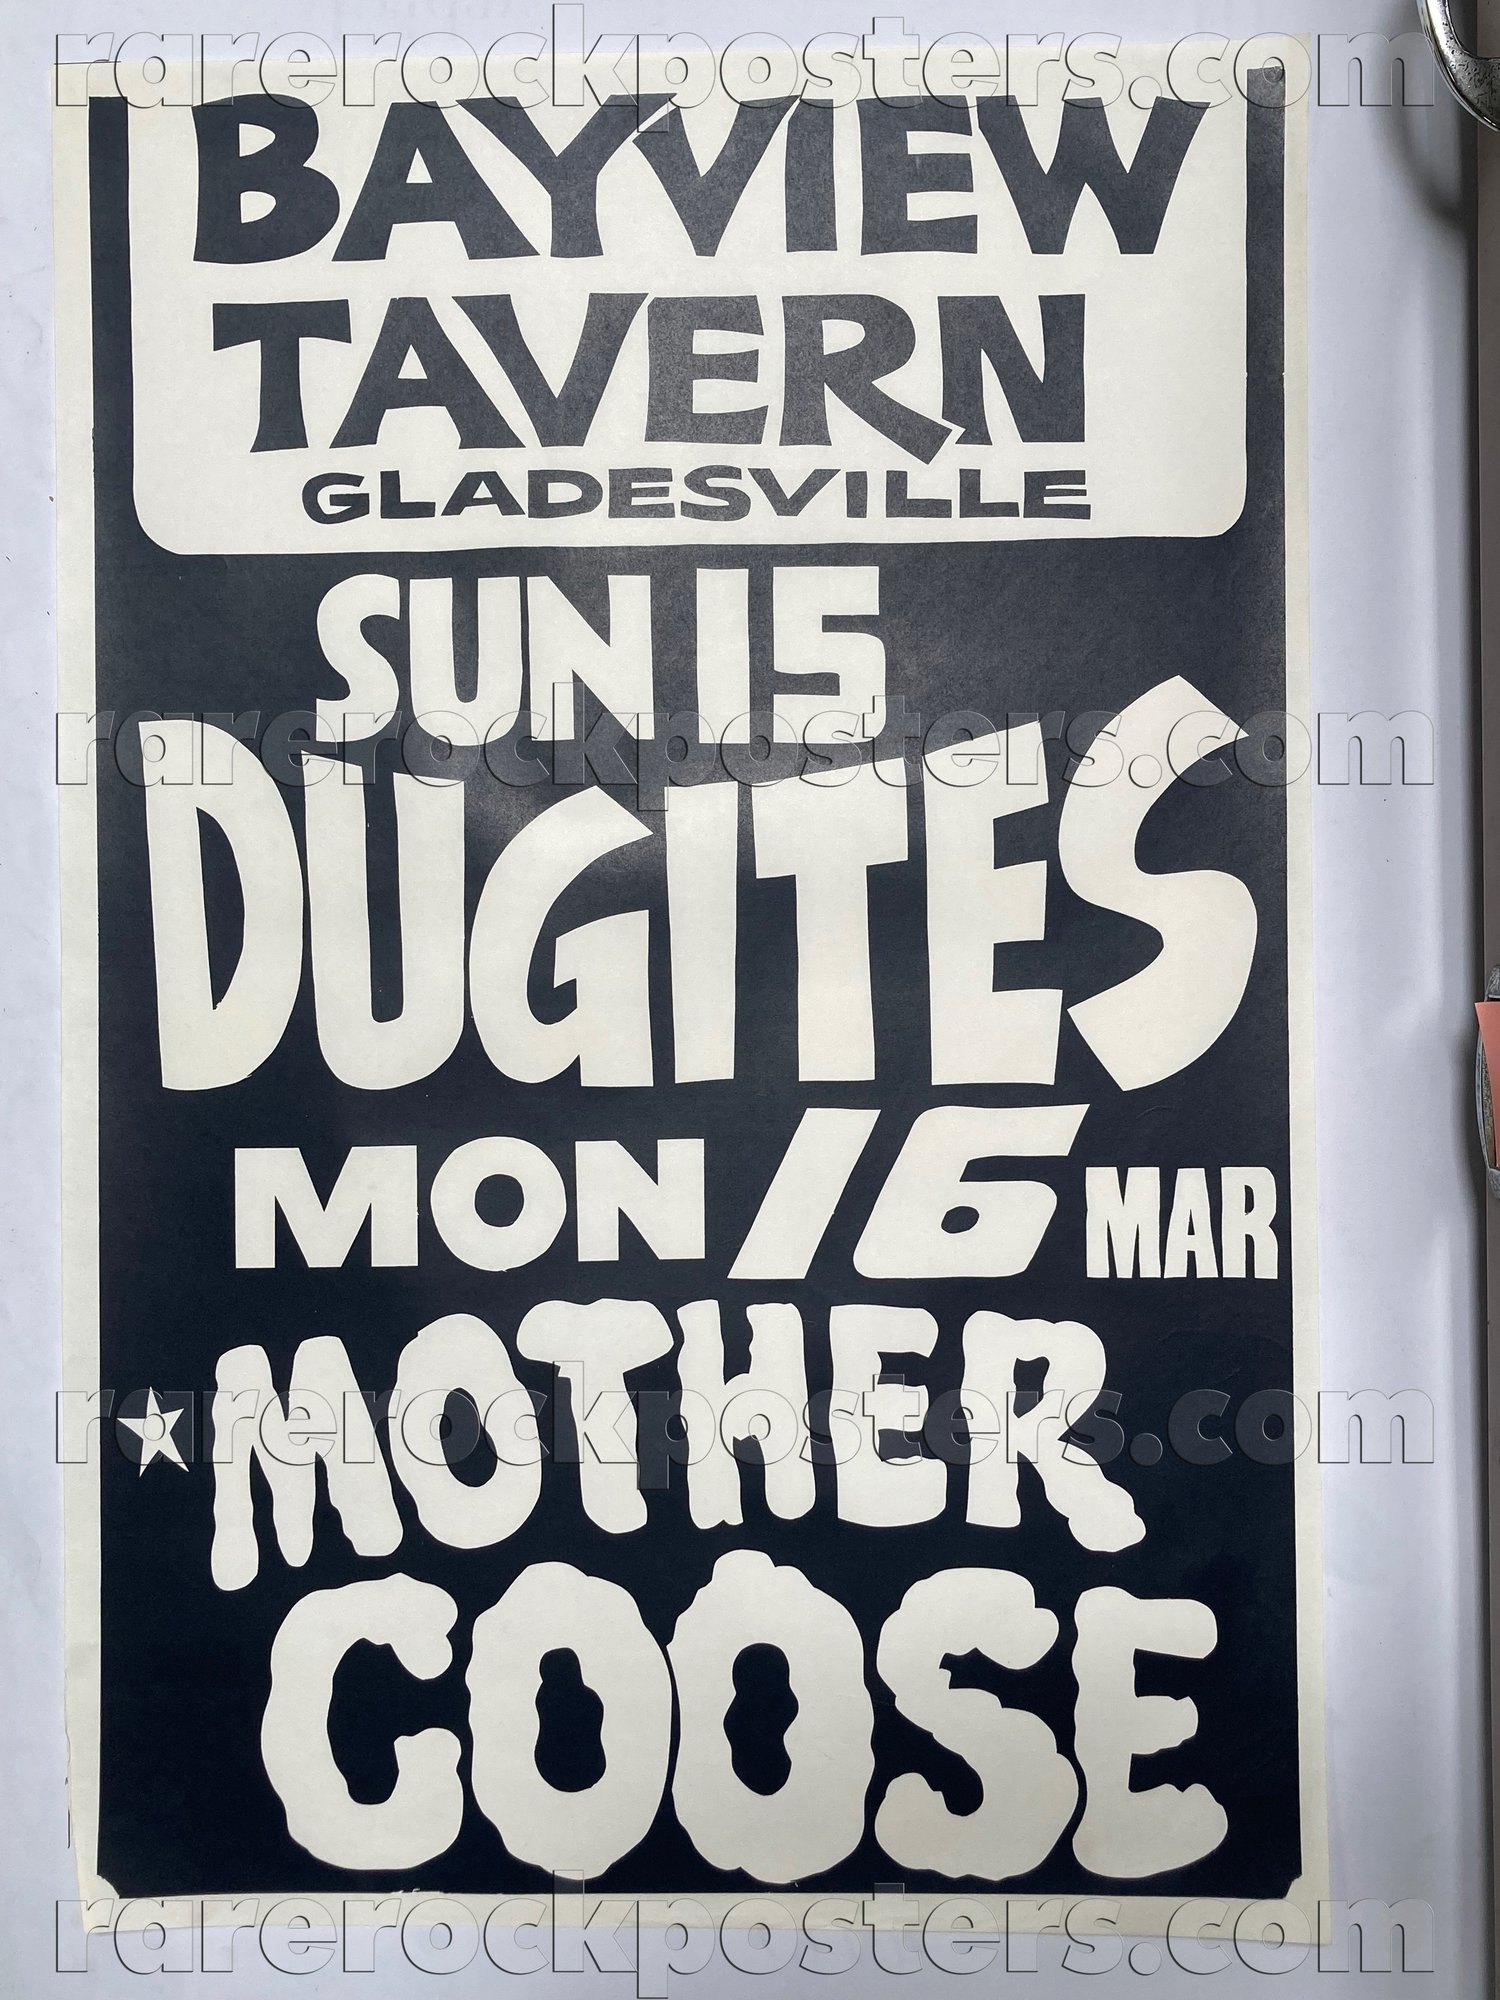 DUGITES / MOTHER GOOSE ~ ORIG 1981 AUST GIG POSTER ~ BAYVIEW TAVERN ~ GLADESVILLE